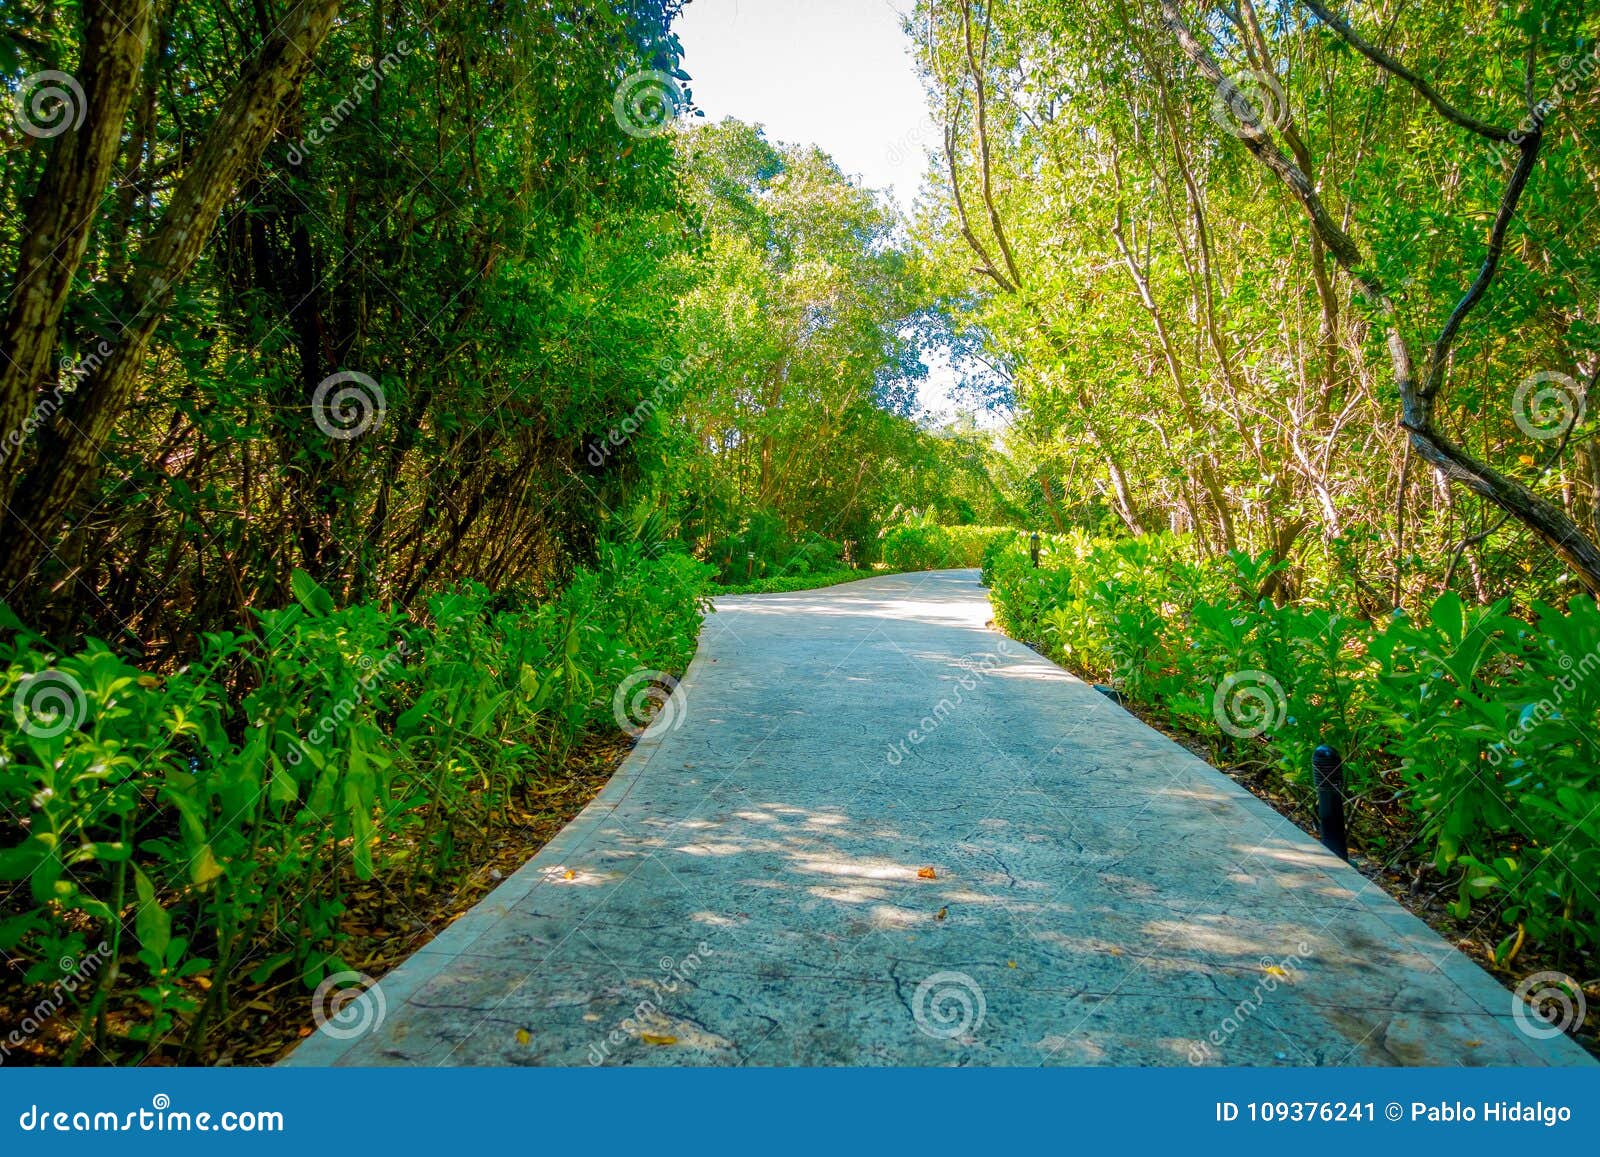 beautiful stone path surrounding of vegetation in playacar neighborhood, playa del carmen, mexico